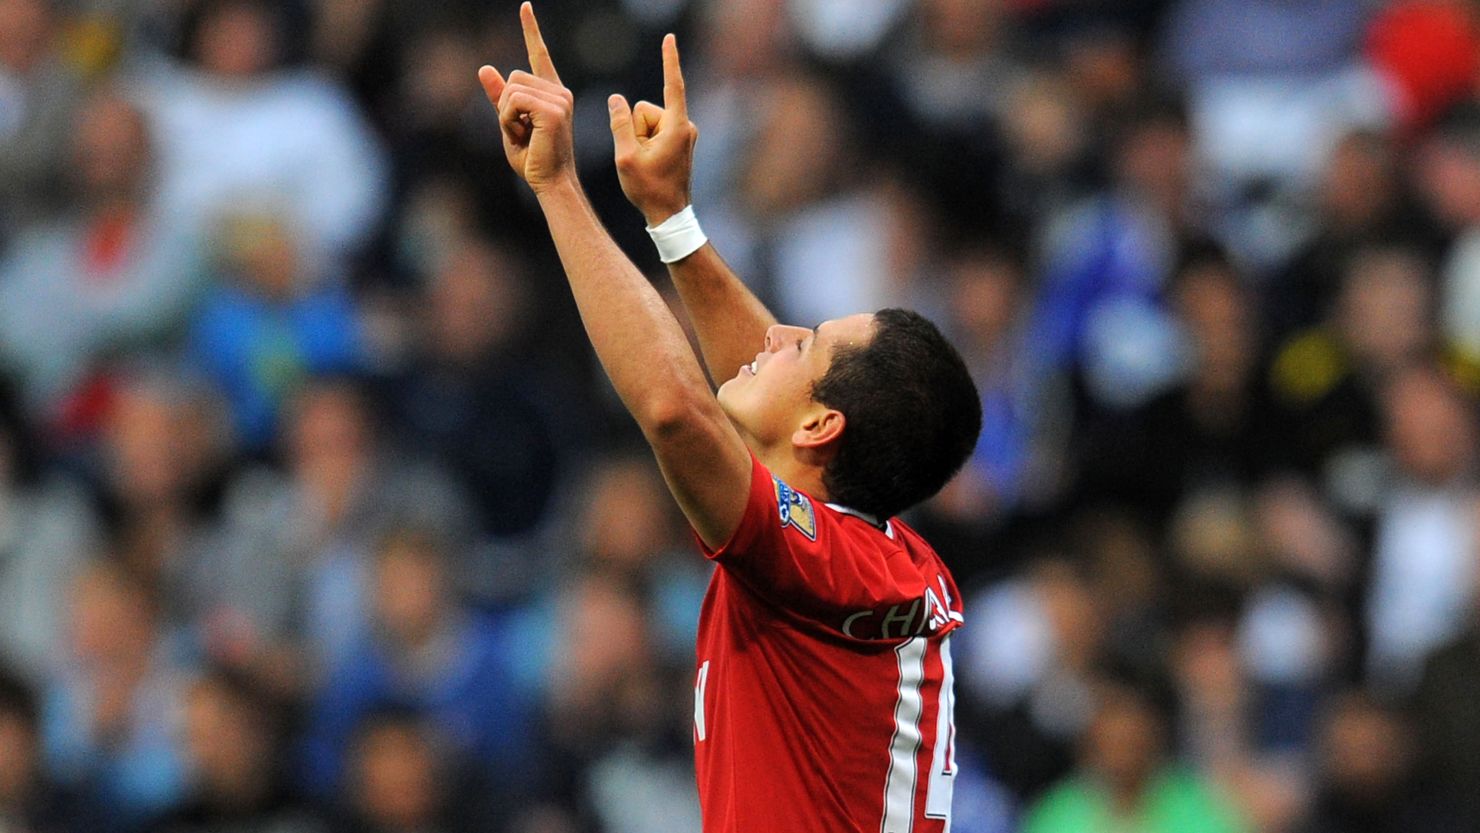 Mexico striker Javier Hernandez has scored three Premier League goals for Manchester United this season.